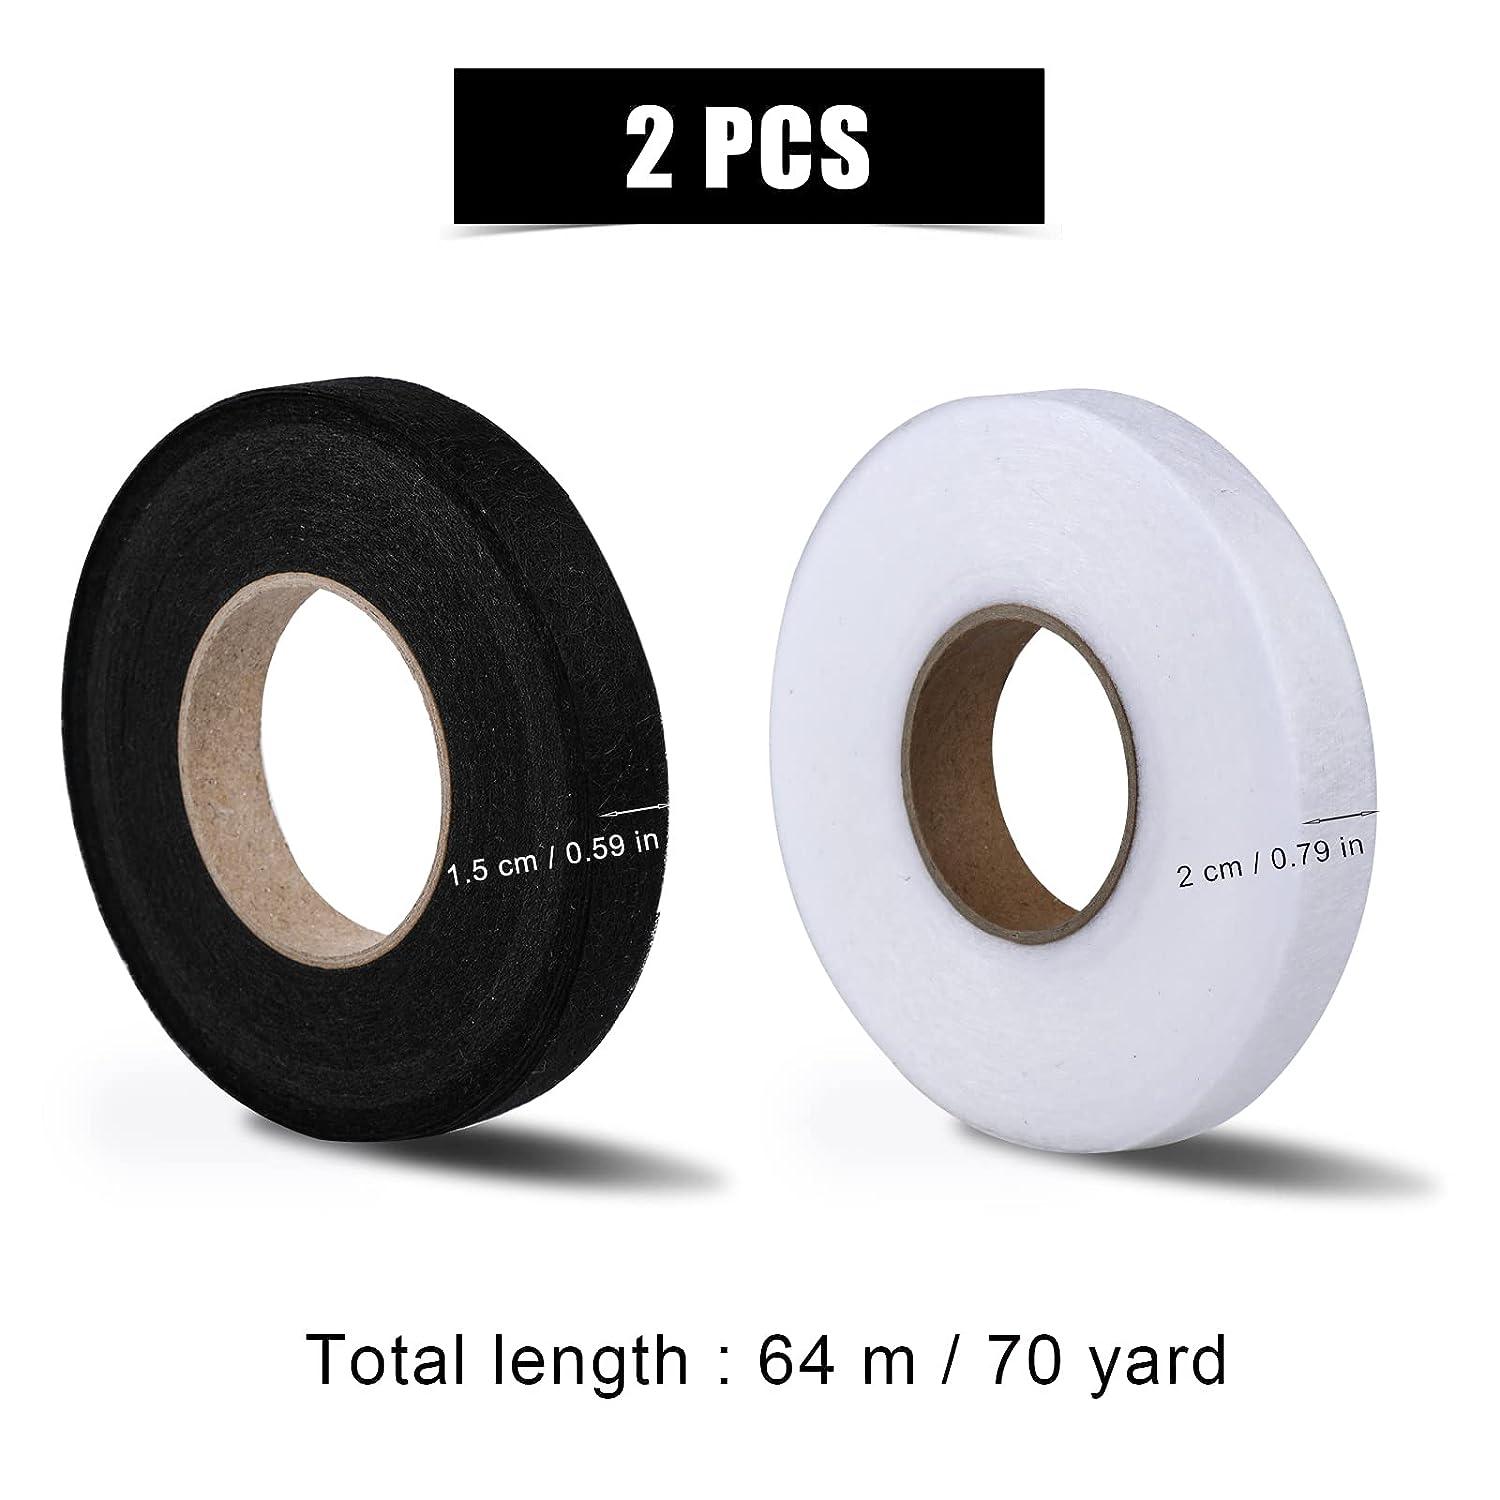  SAVITA 2 Rolls 140 Yards Hem Tape, No Sew Hemming Tape Iron-On  Fabric Fusing Tape for Hemming Broken Clothes Pants Jeans Trouser Skirt  (Black 1.5cm /0.6inch, White 2cm / 0.8inch in